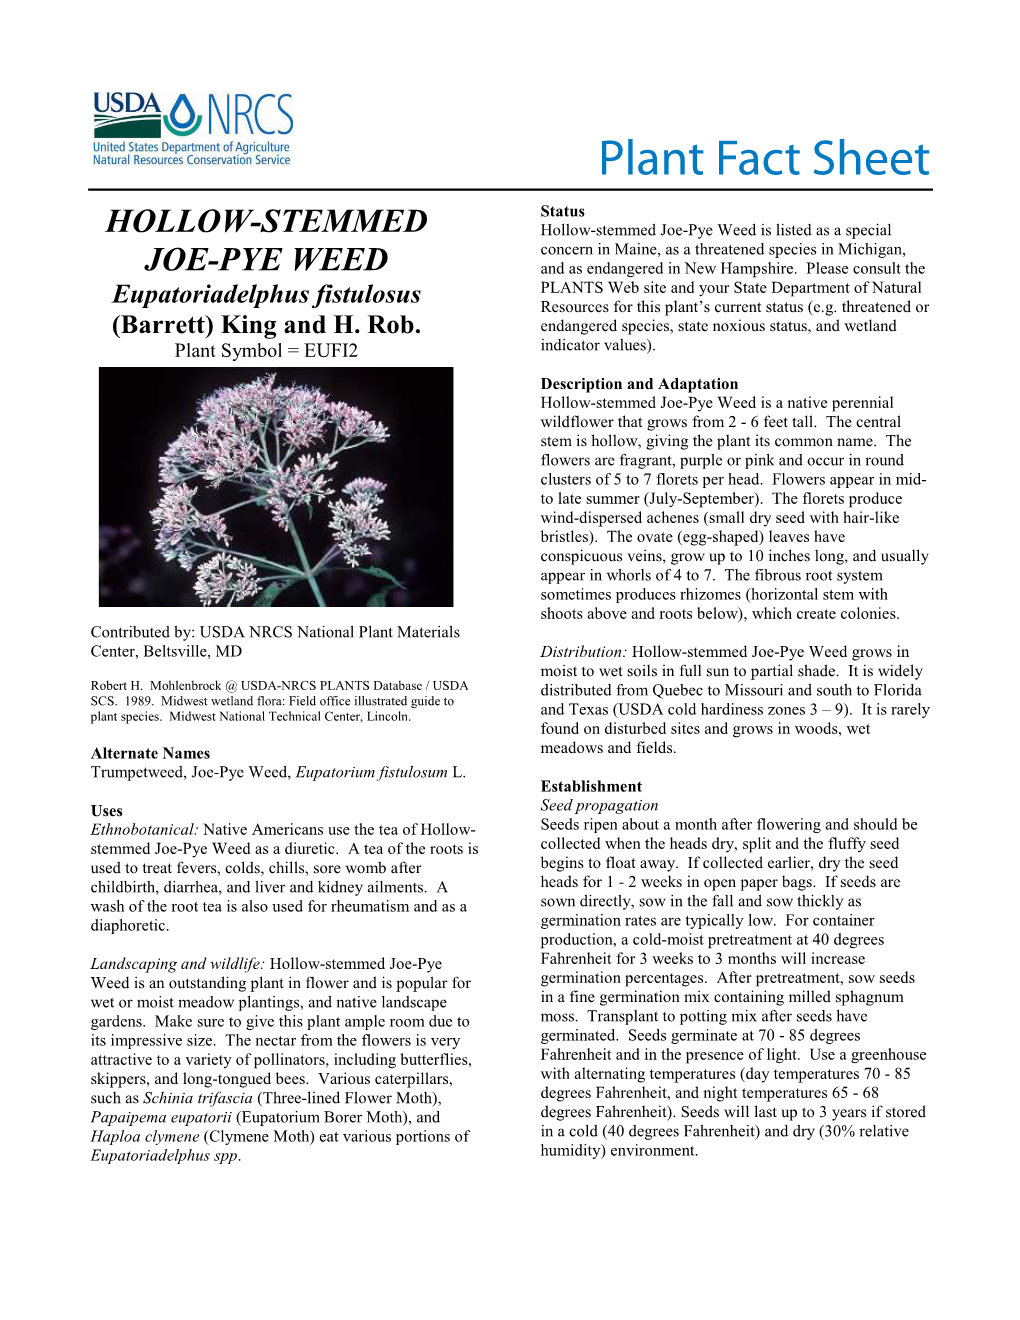 Hollow-Stemmed Joe-Pye Weed (Eupatoriadelphus Fistulosus) Plant